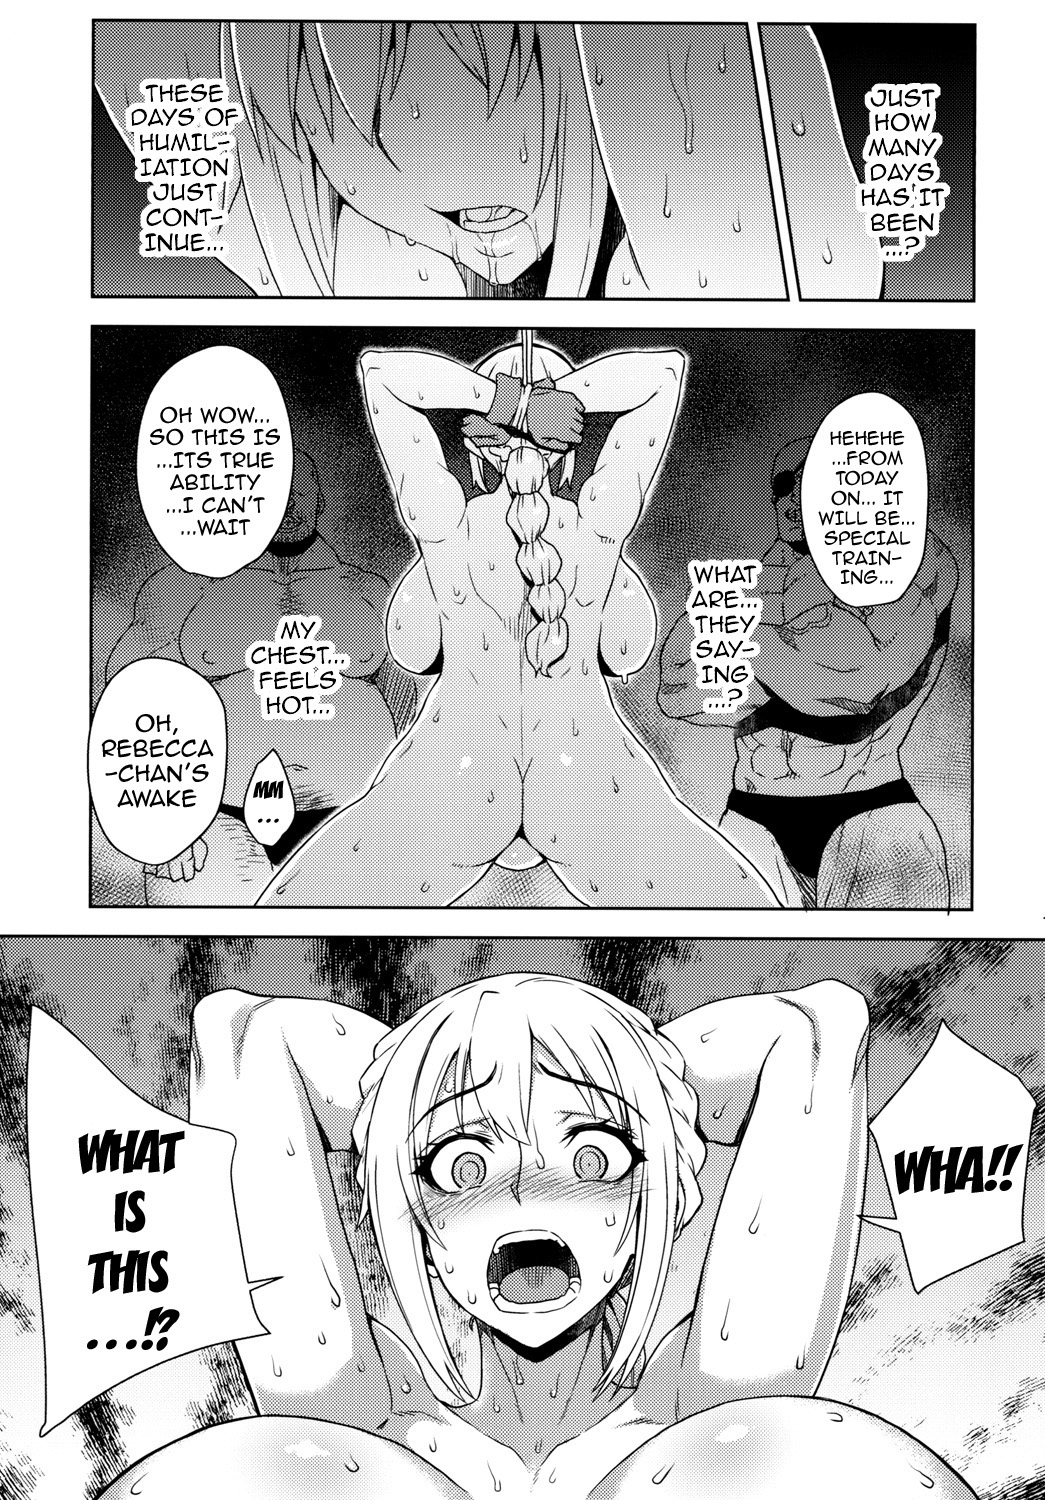 Read Slave Gladiator Rebecca One Piece Hentai Online Porn Manga And Doujinshi